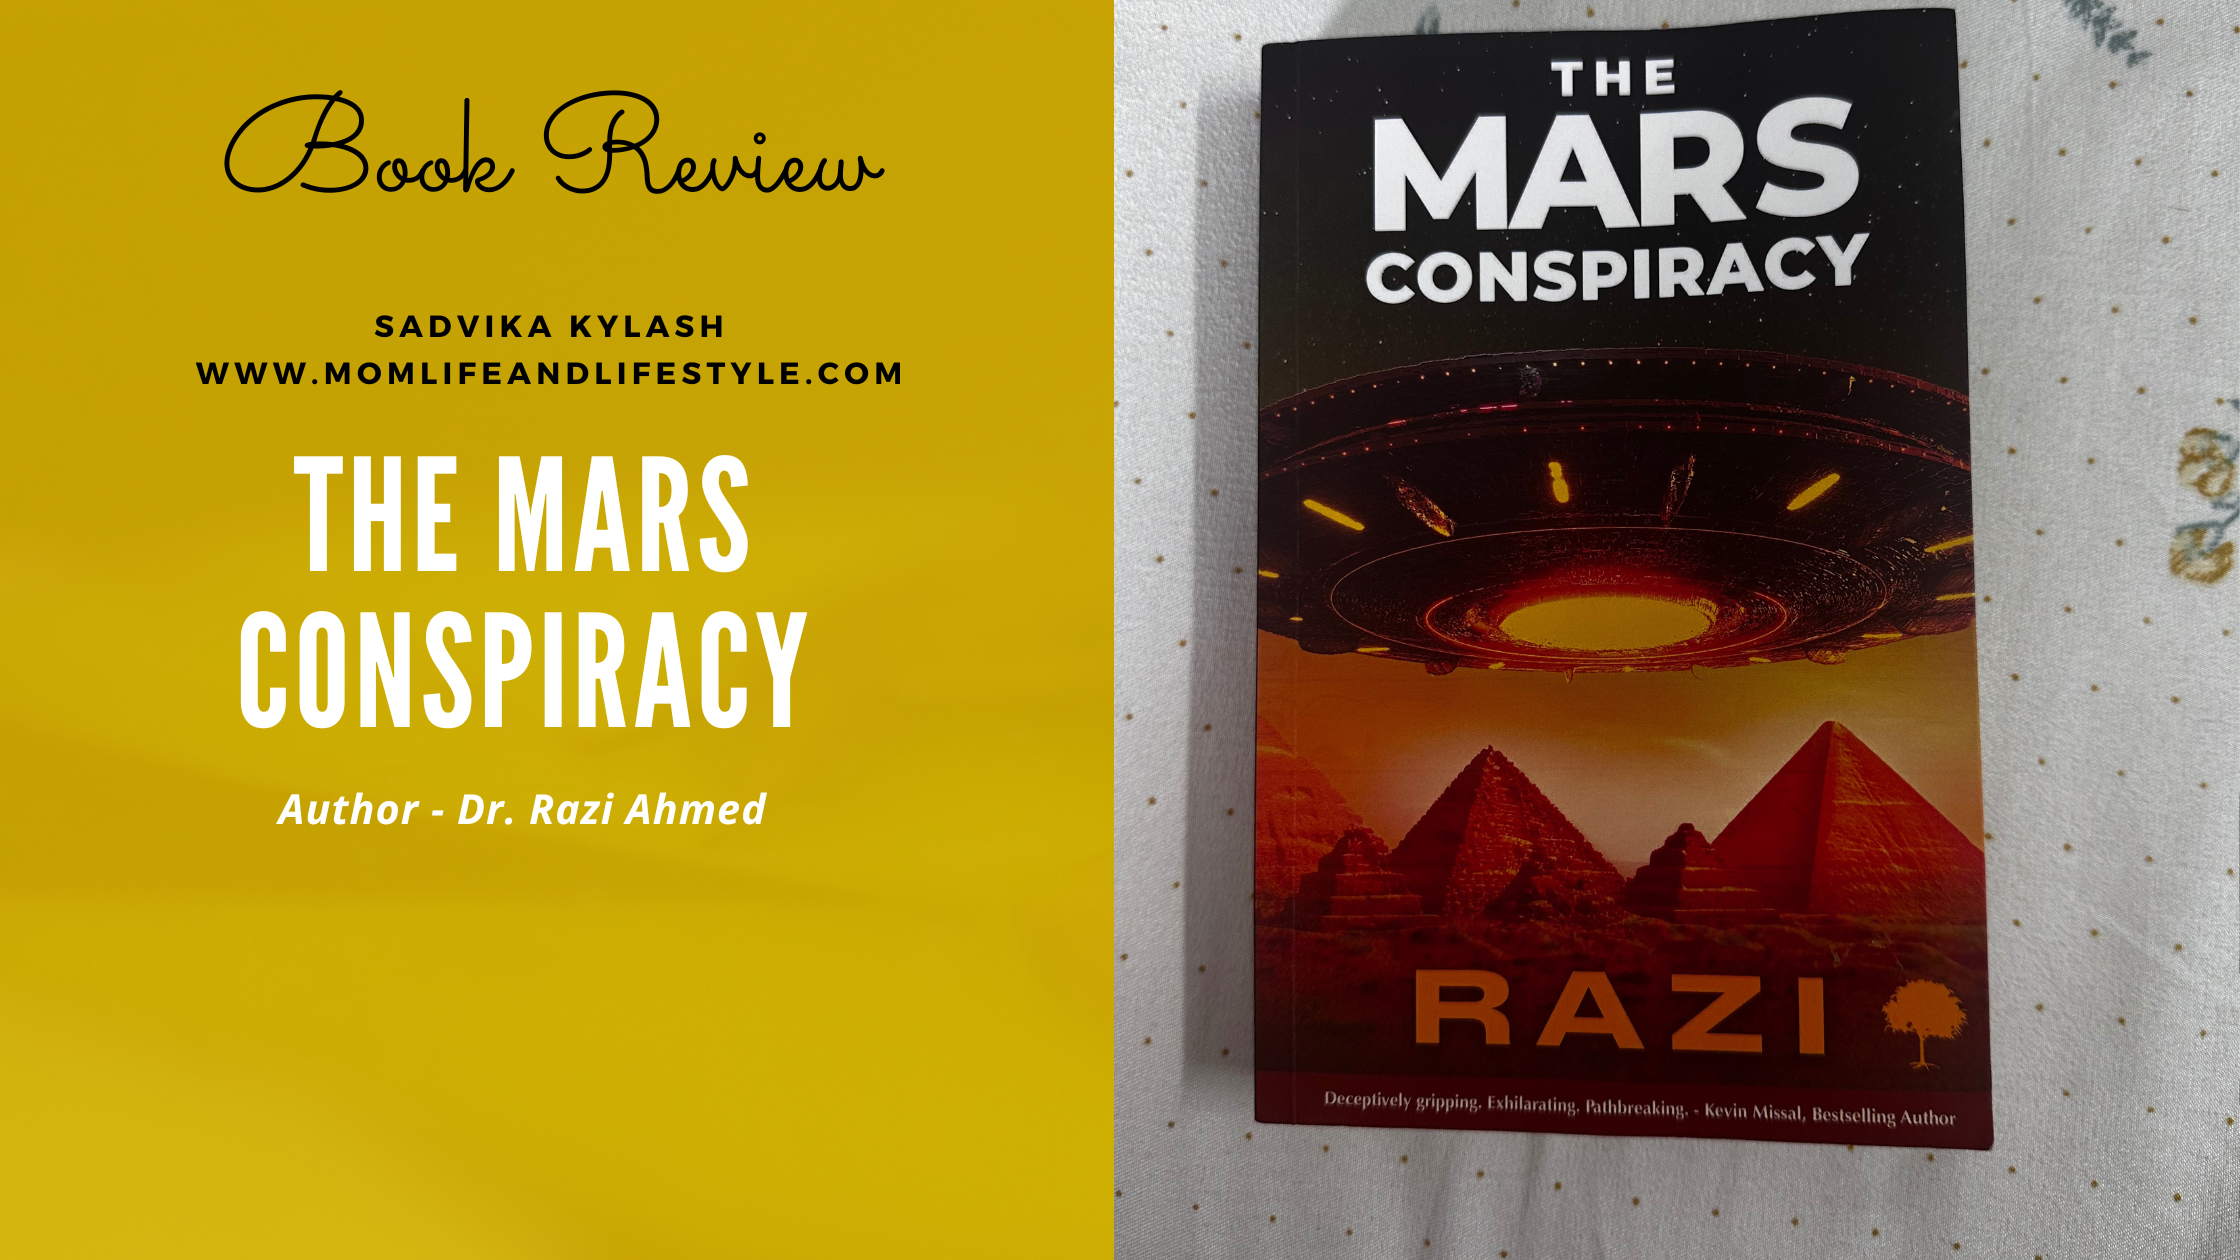 The Mars Conspiracy book review by Sadvika Kylash